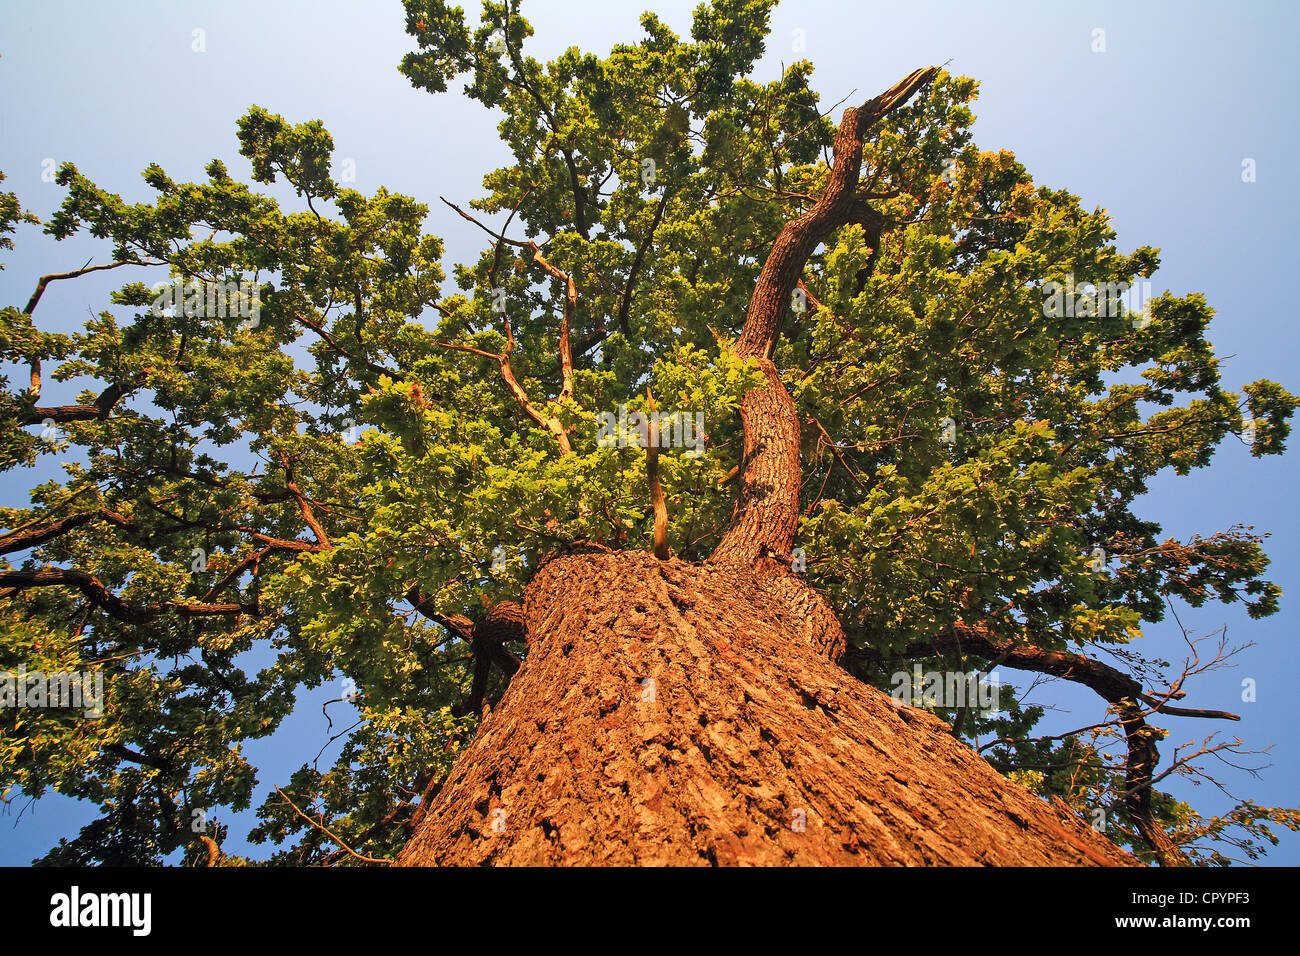 Old oak tree (Quercus robur), worm's-eye view Stock Photo